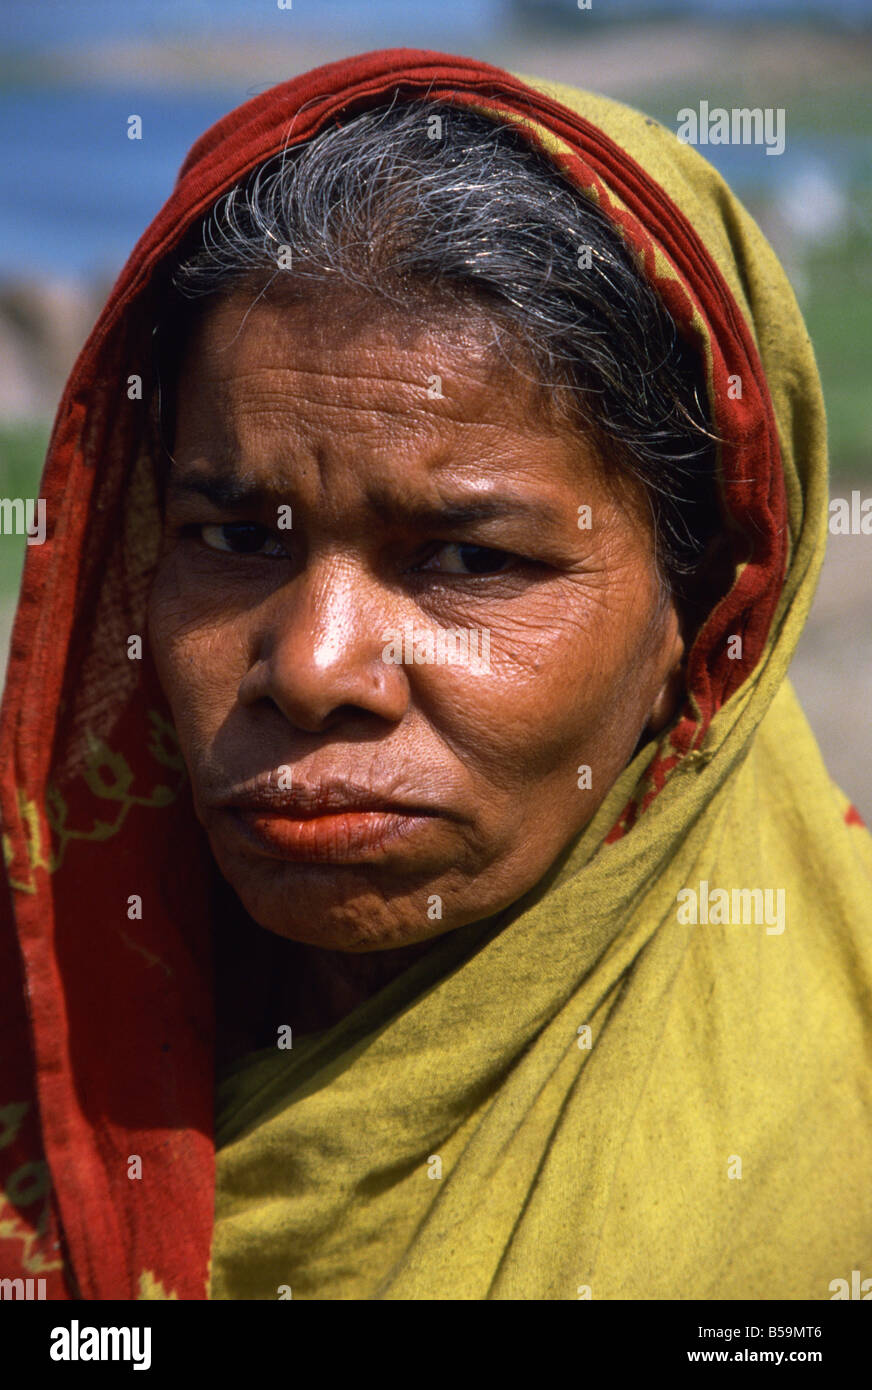 Ritratti di una donna da una baraccopoli, Dhaka, Bangladesh Foto Stock